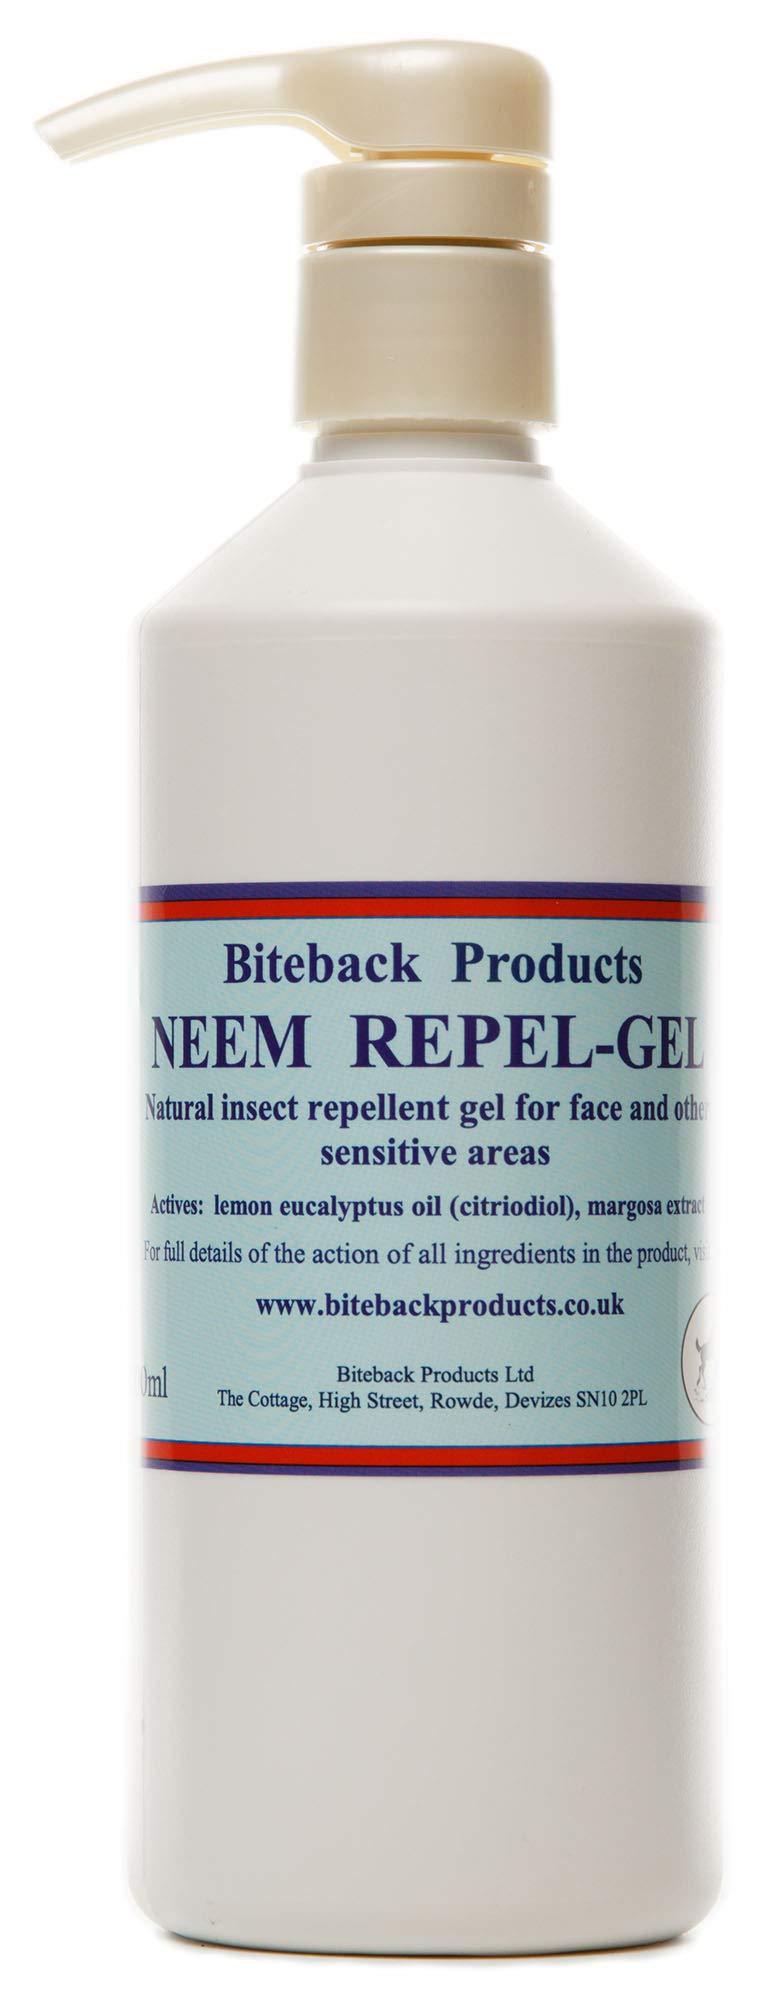 Biteback Products 'Neem Repel Gel'™ Horse Fly Midge Repellent for Sensitive Areas 500ml - PawsPlanet Australia